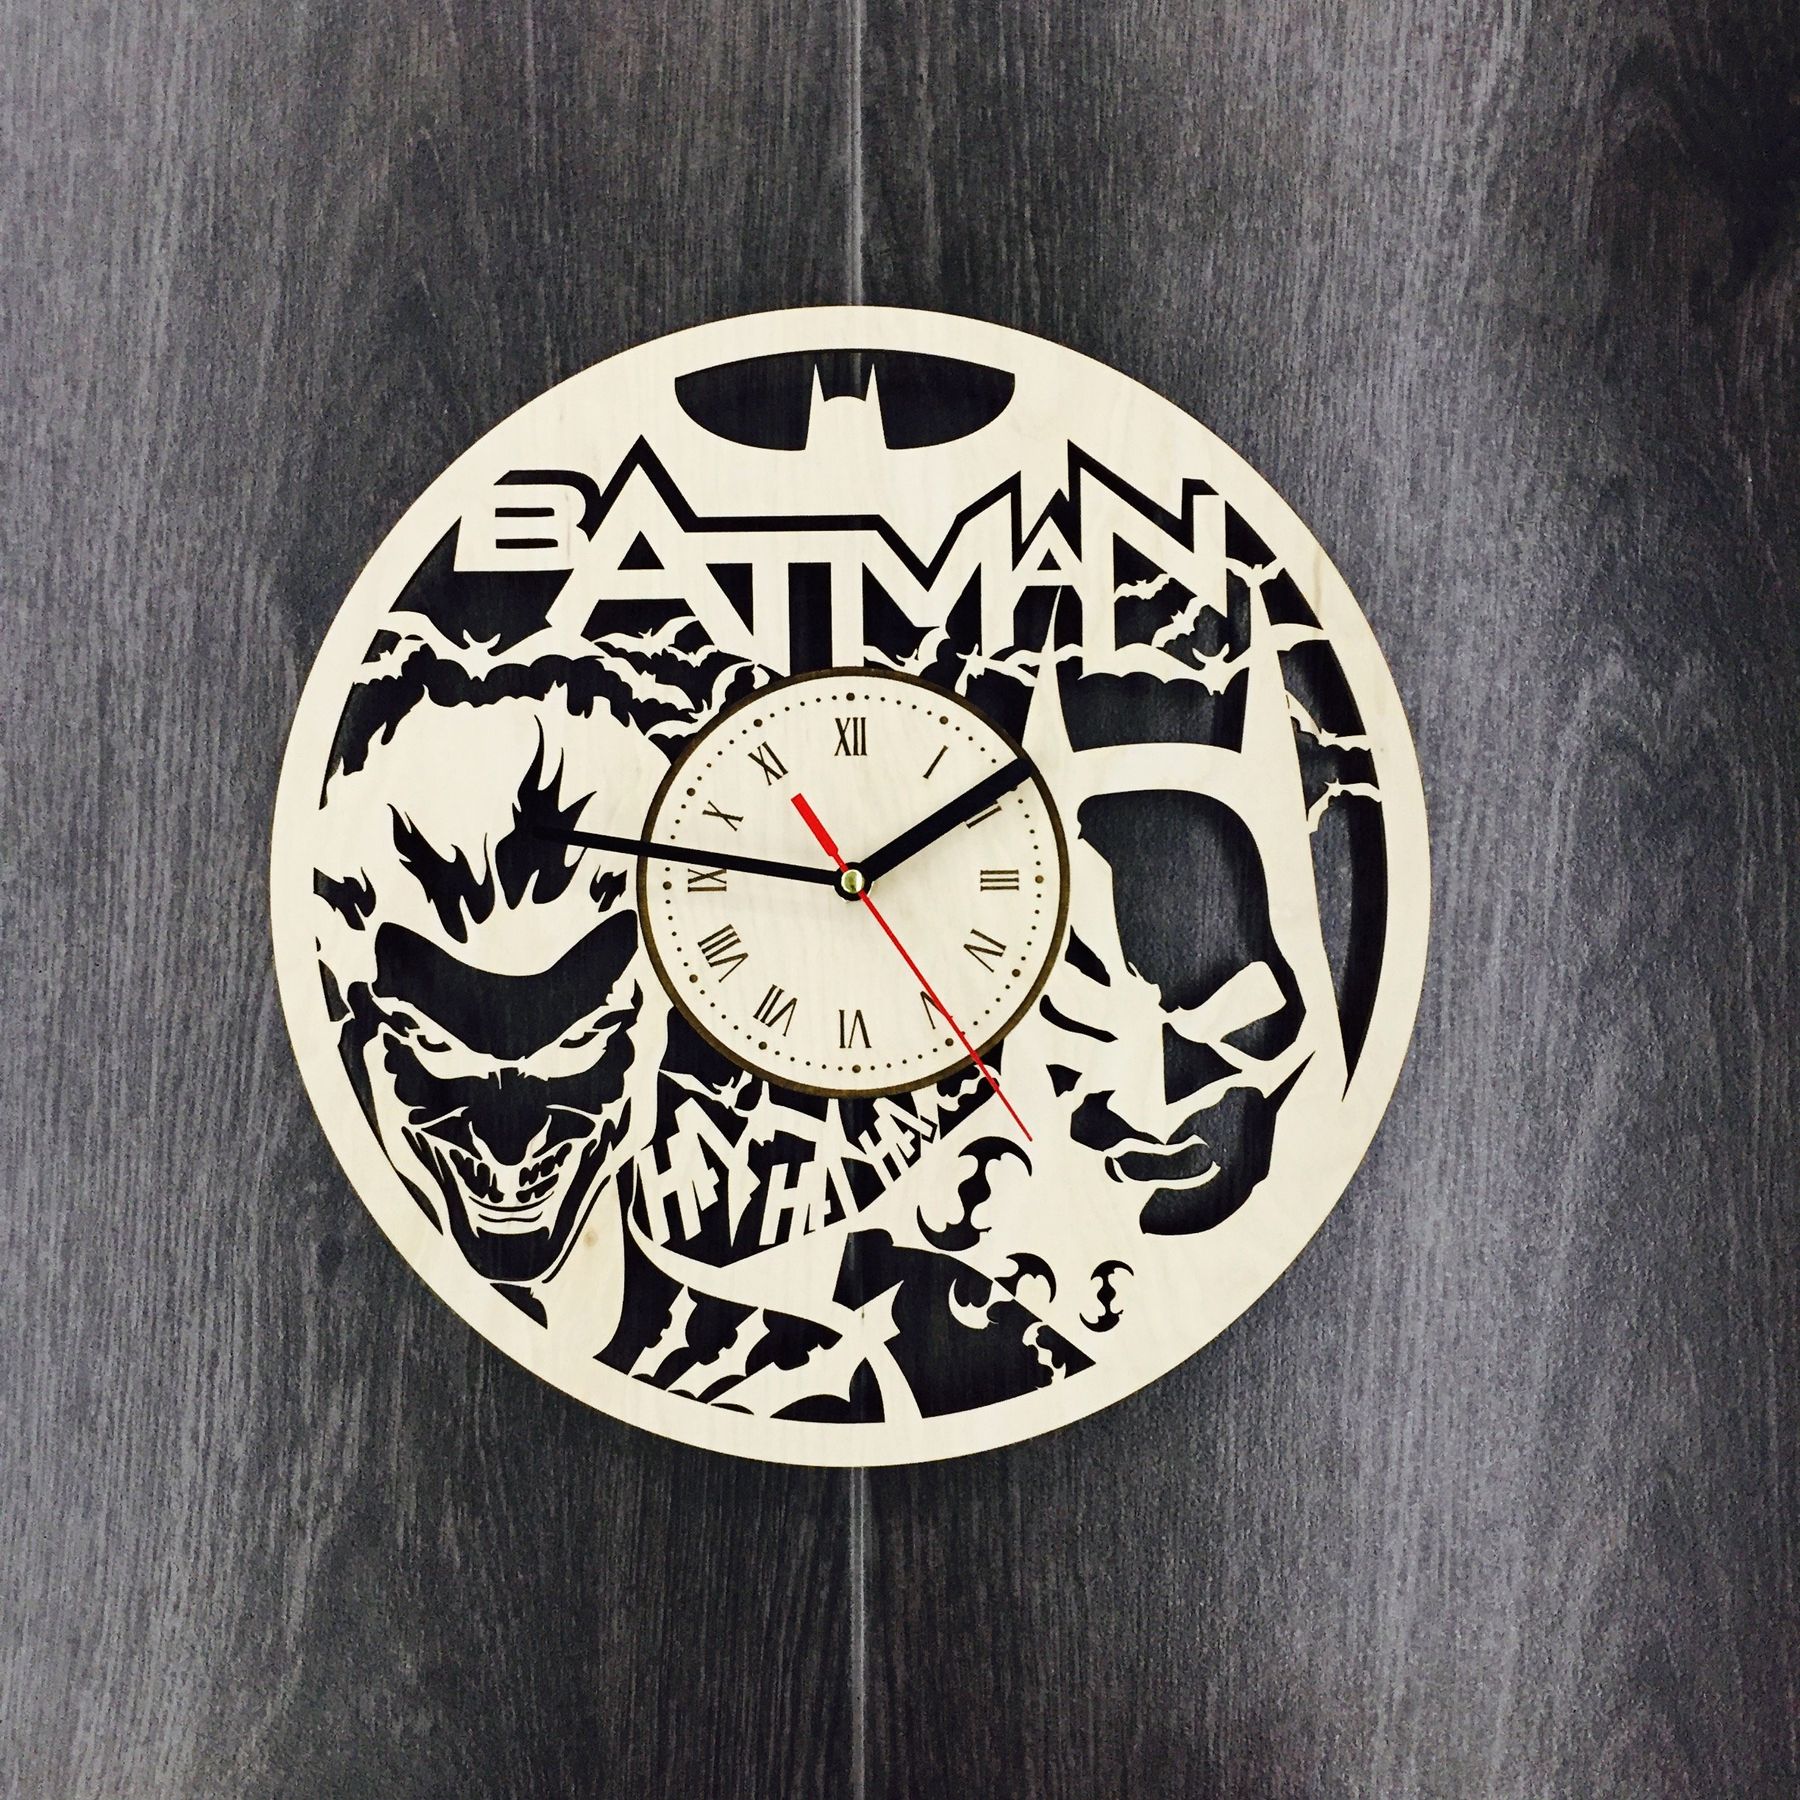 Бэтмен деревянные часы. Часы в виде Бэтмен настенные кастомные. Бетмен часы лазерная резка. Часы на дачу.